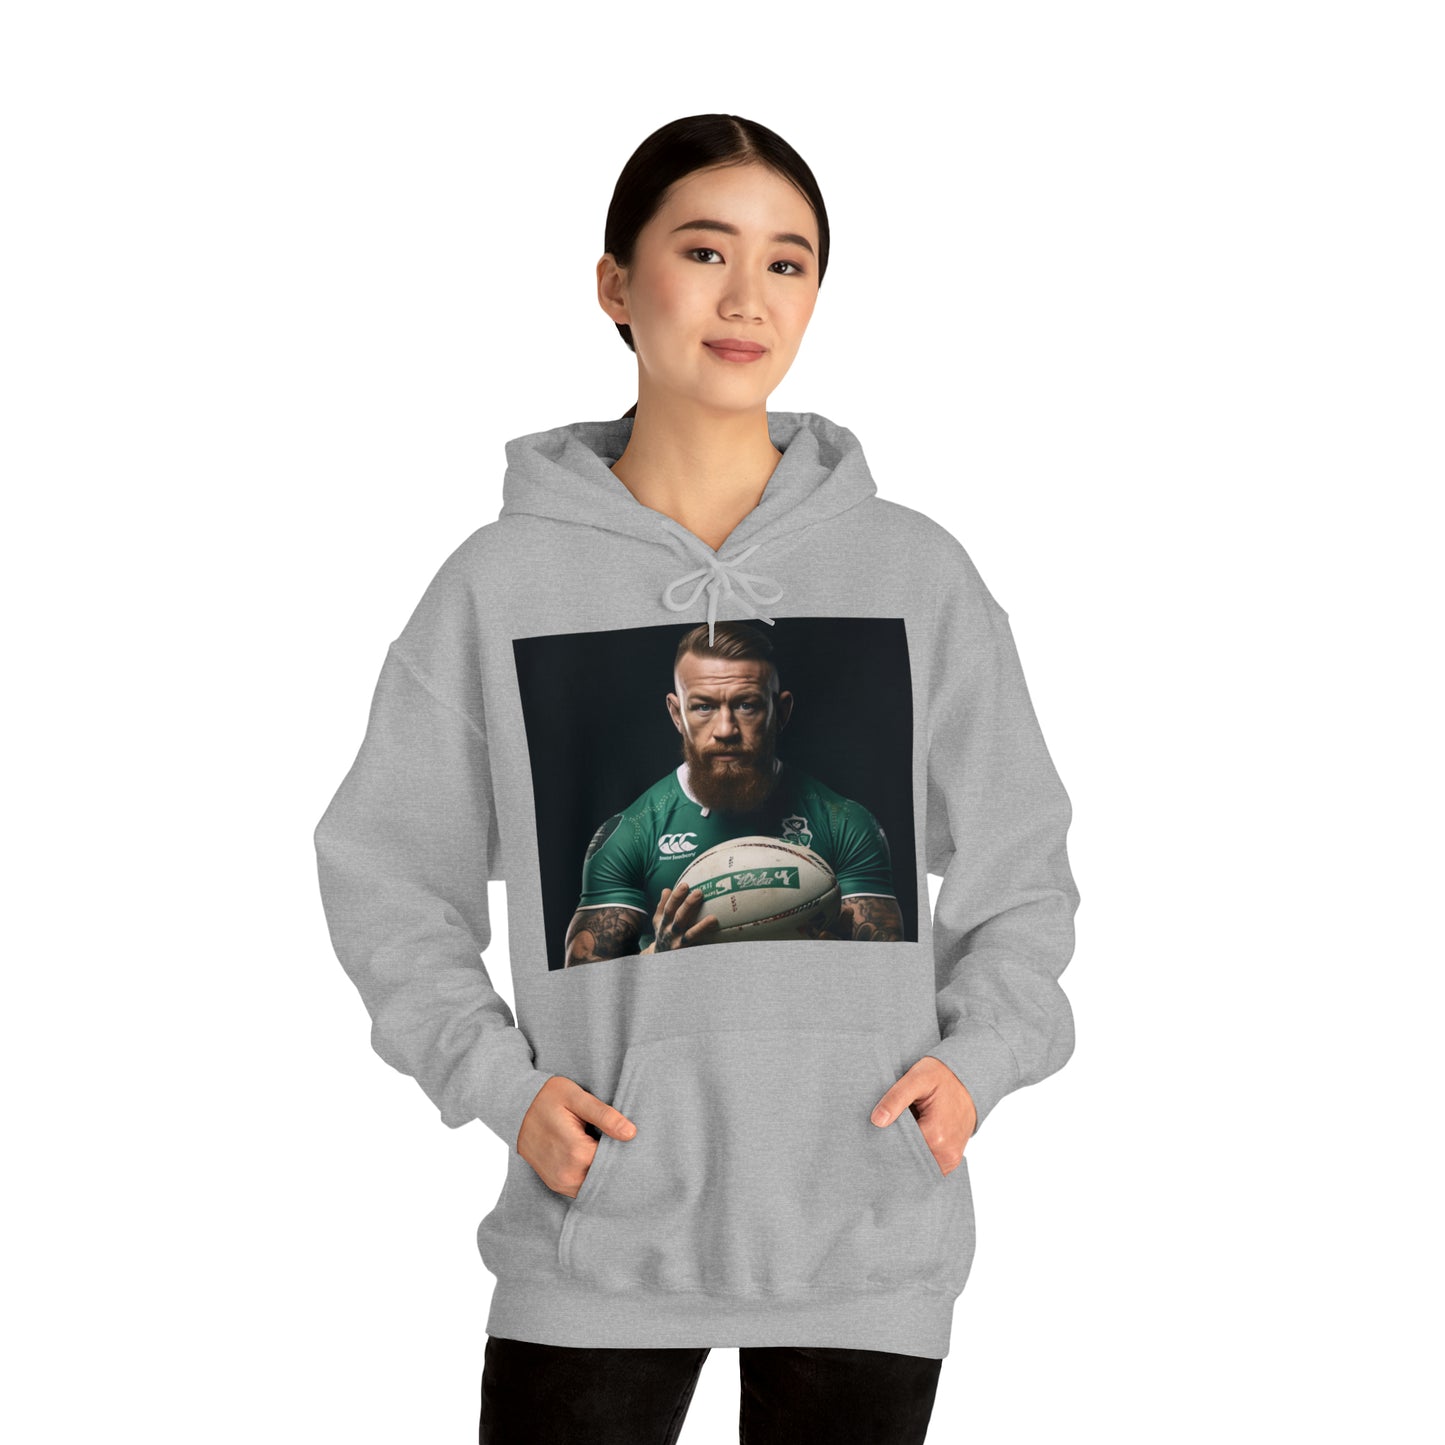 Serious Conor - light hoodies